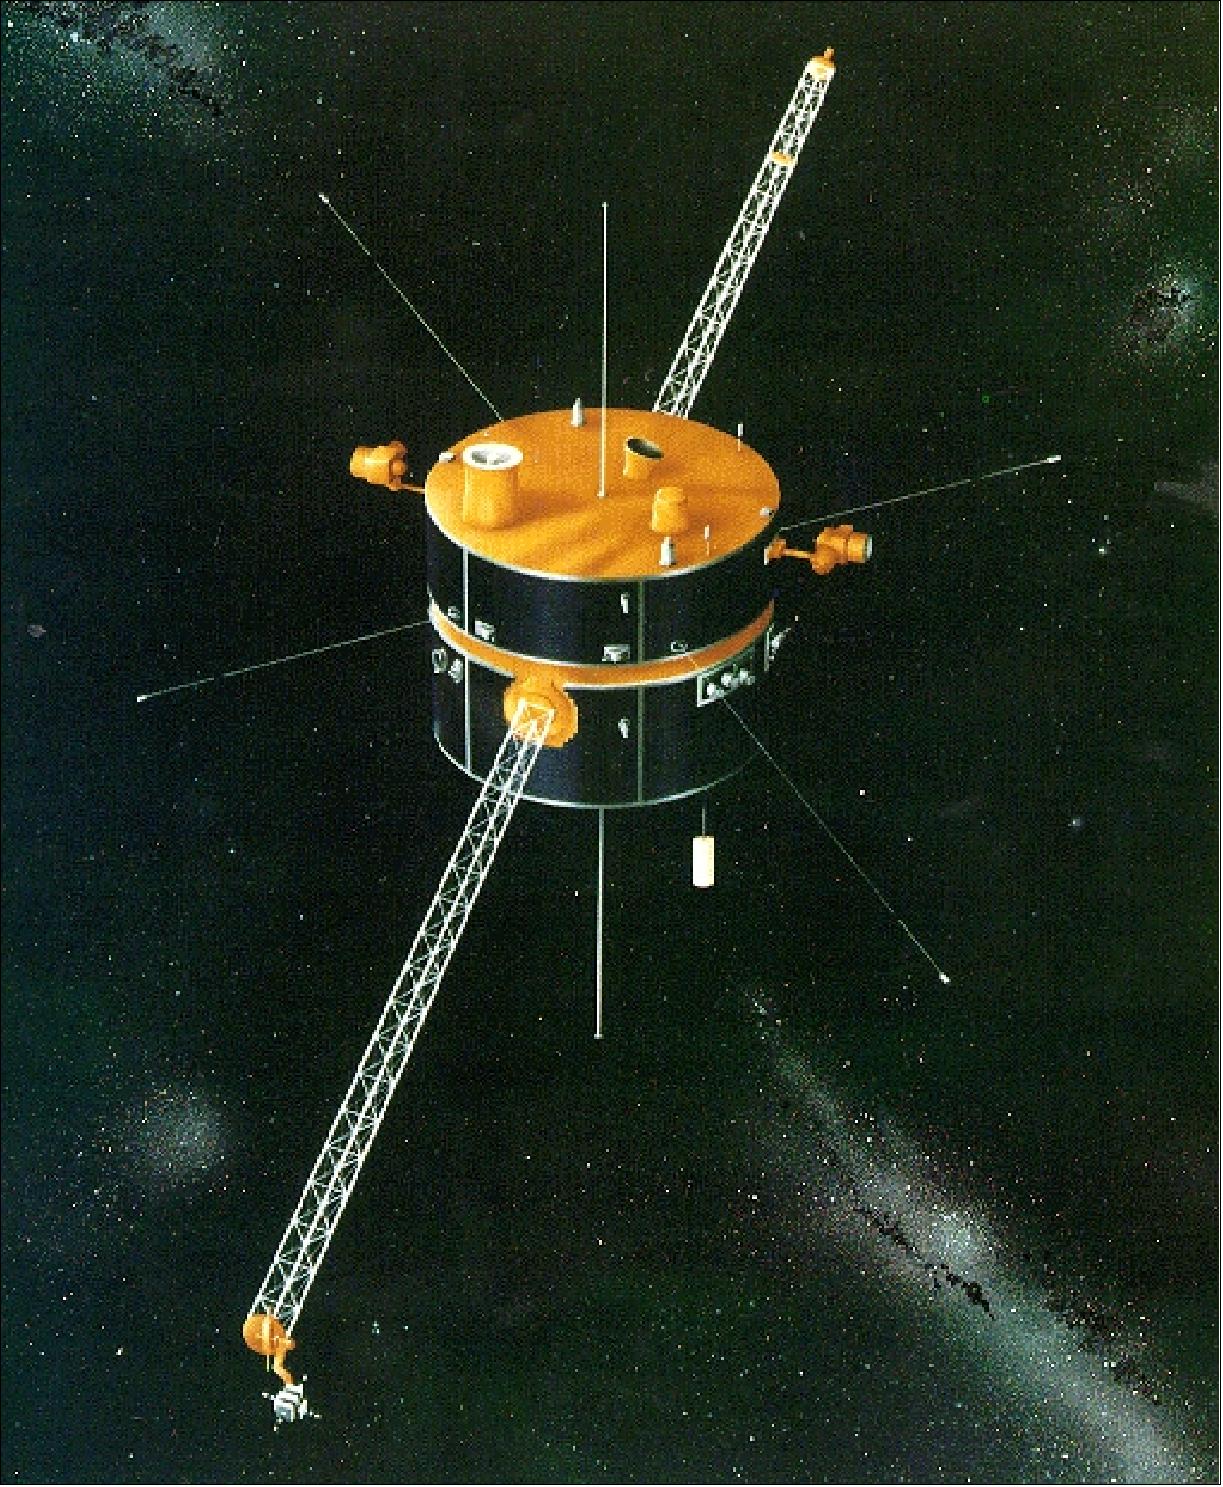 Figure 1: Artist's illustration of the WIND spacecraft (image credit: NASA)